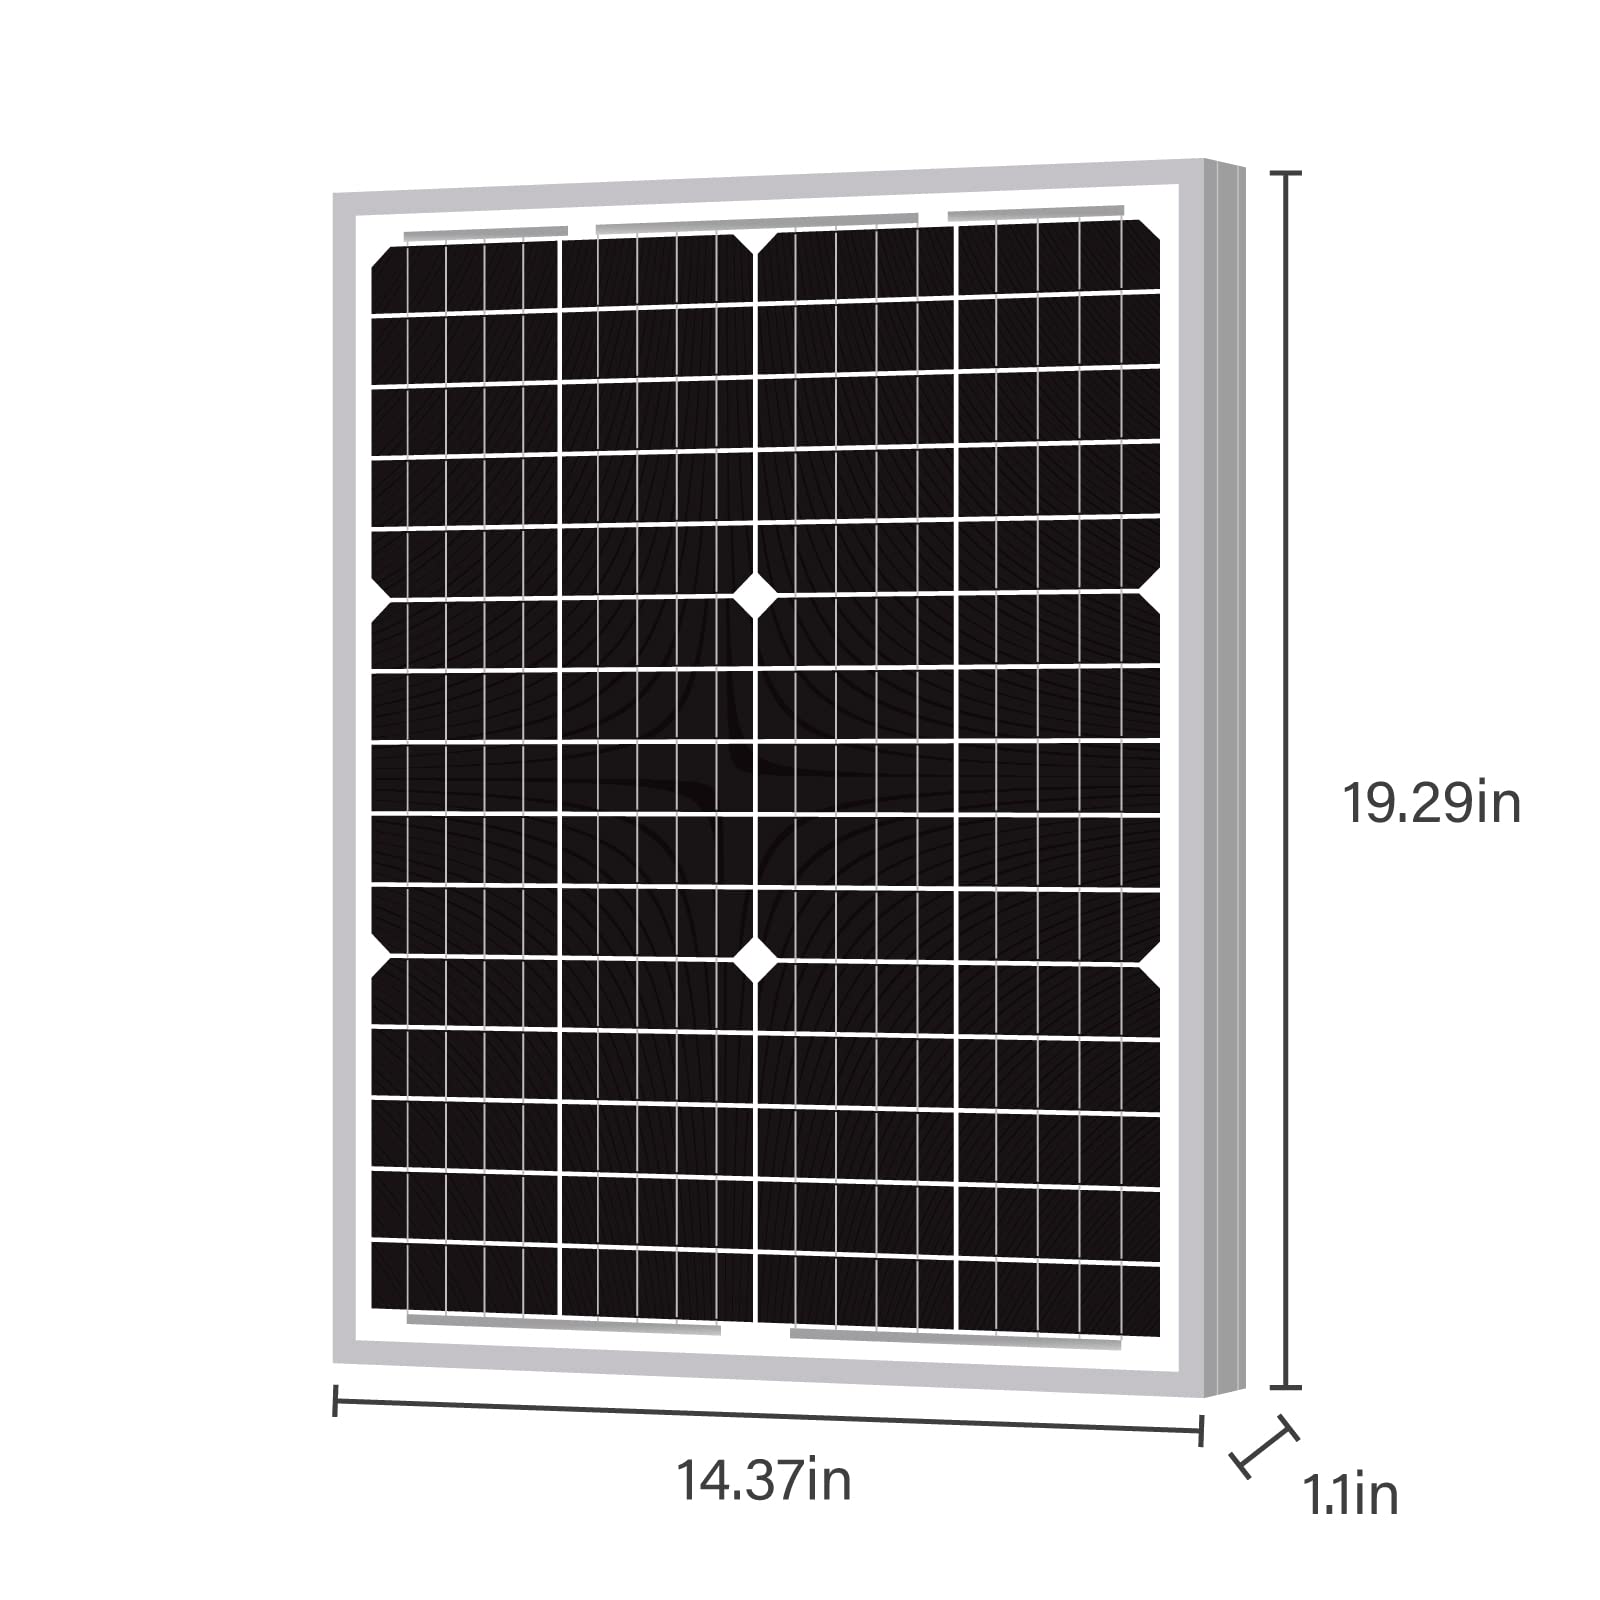 Newpowa 30W 24V Solar Panel High-Efficiency Monocrystalline 24V PV Module Designed for 24V Off Grid System, Charge Your 24V Battery of RV, Boat, Camper, Trailer, Gate Opener